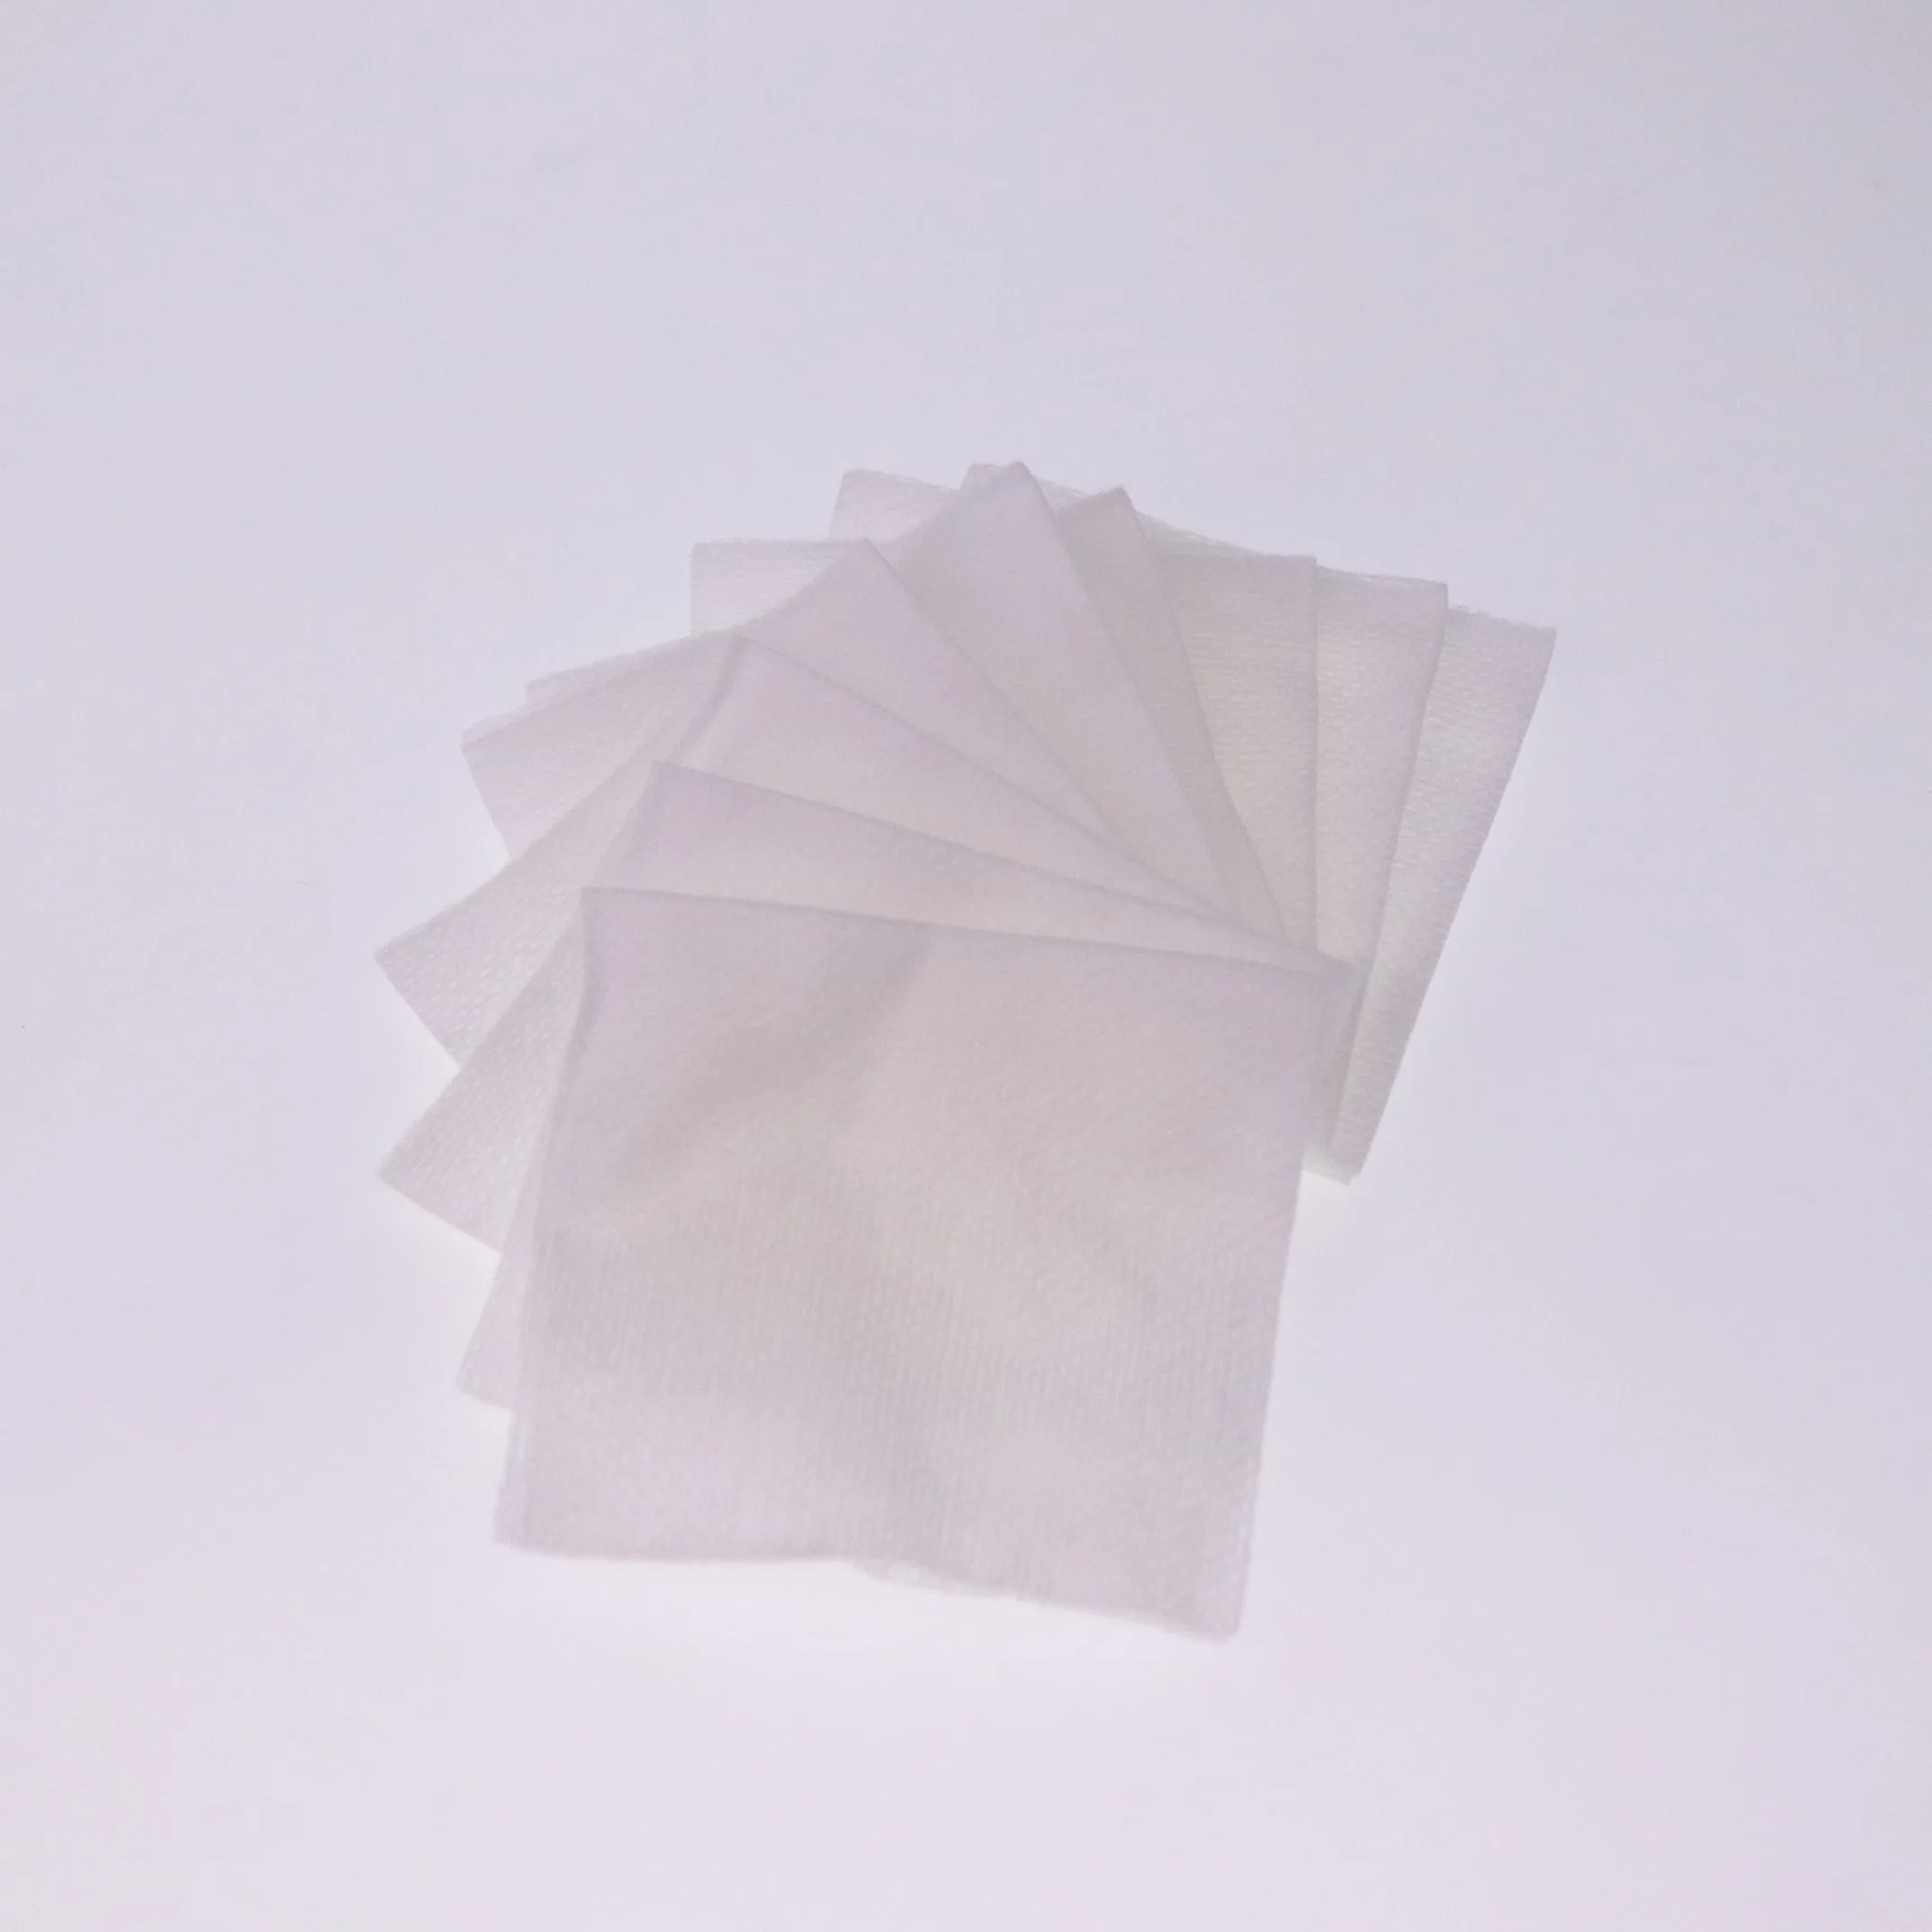 cotton Gauze Swabs Medical Sterile Gauze Pads